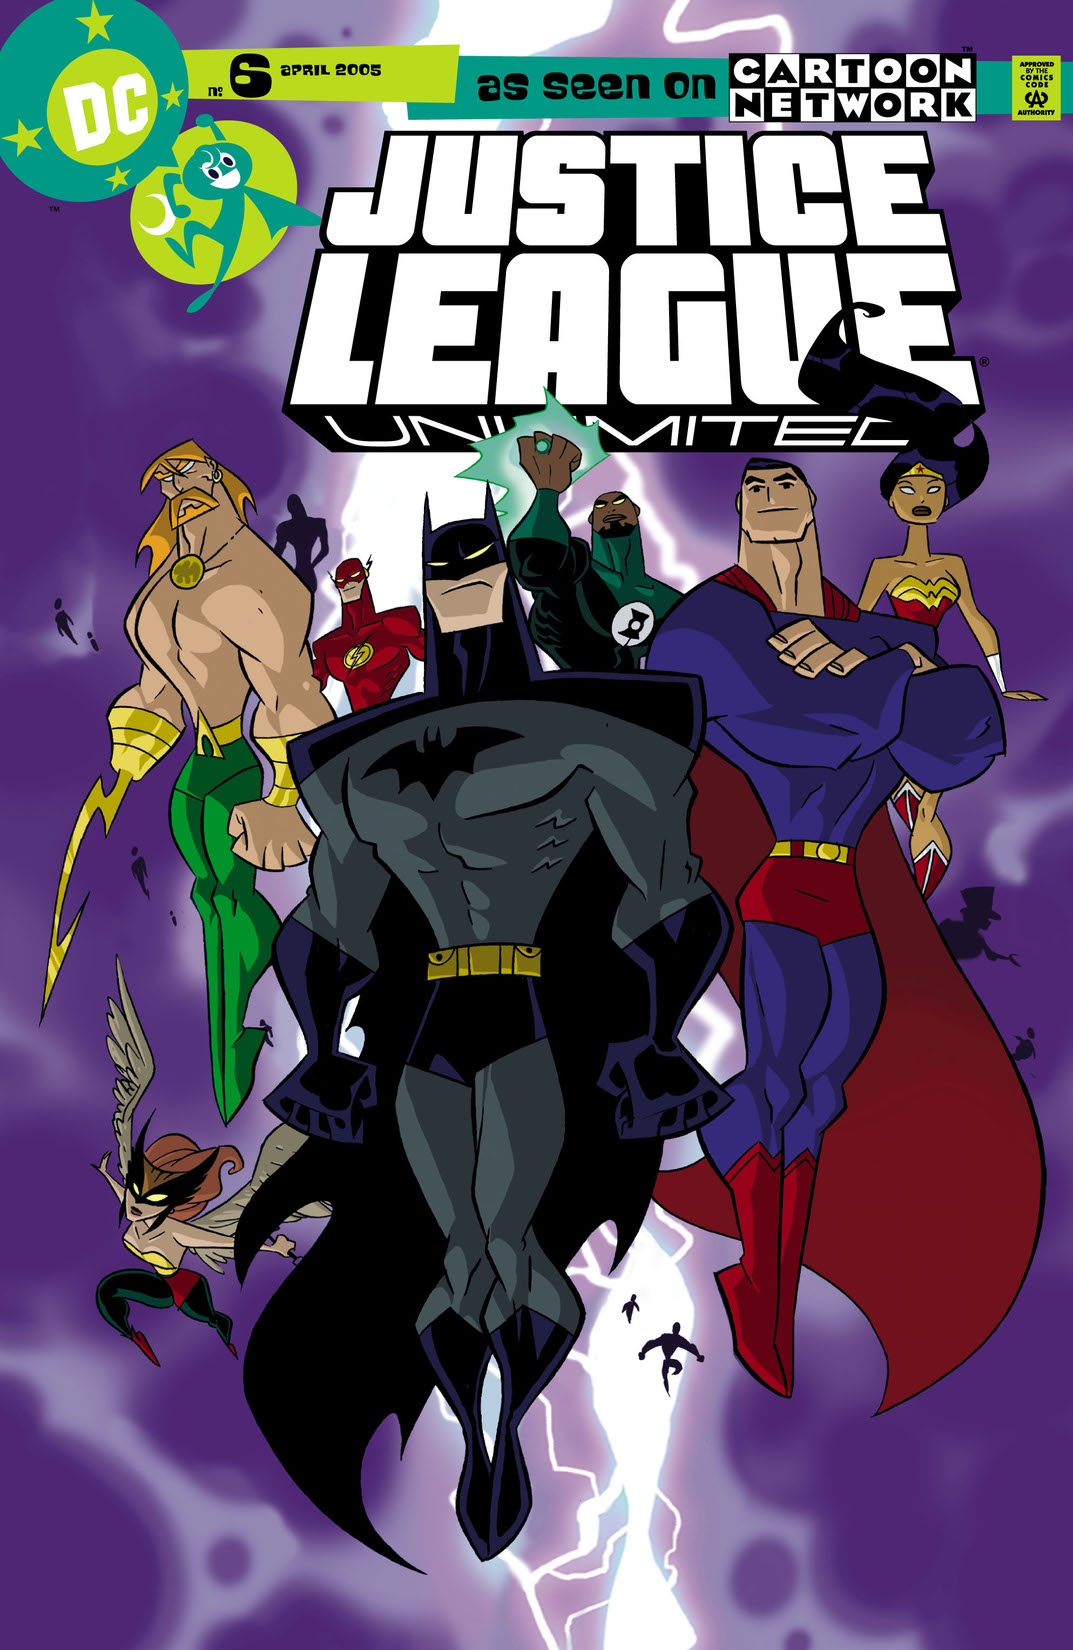 Justice League Unlimited #6 preview images